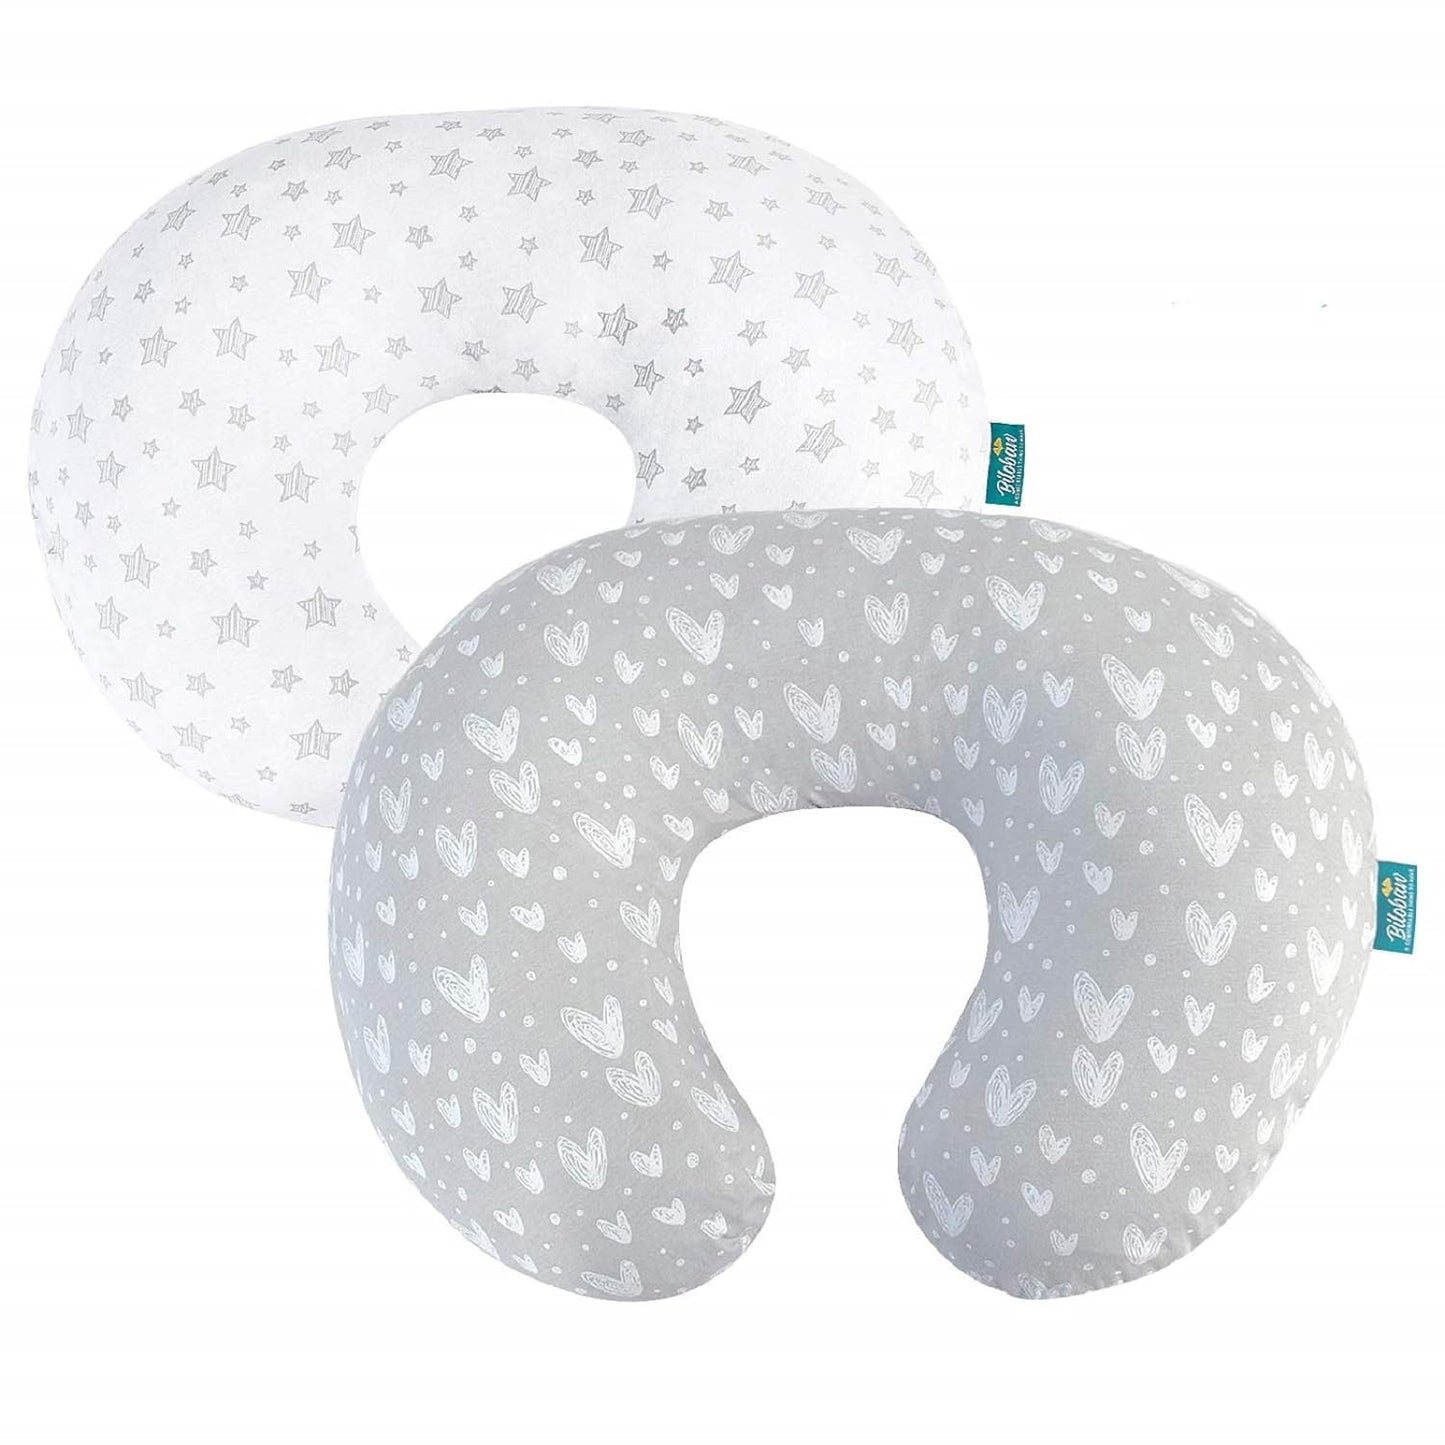 Nursing Pillow Cover for Boppy - 2 Pack, 100% Jersey Cotton, Super Soft & Breathable & Skin Friendly - Biloban Online Store